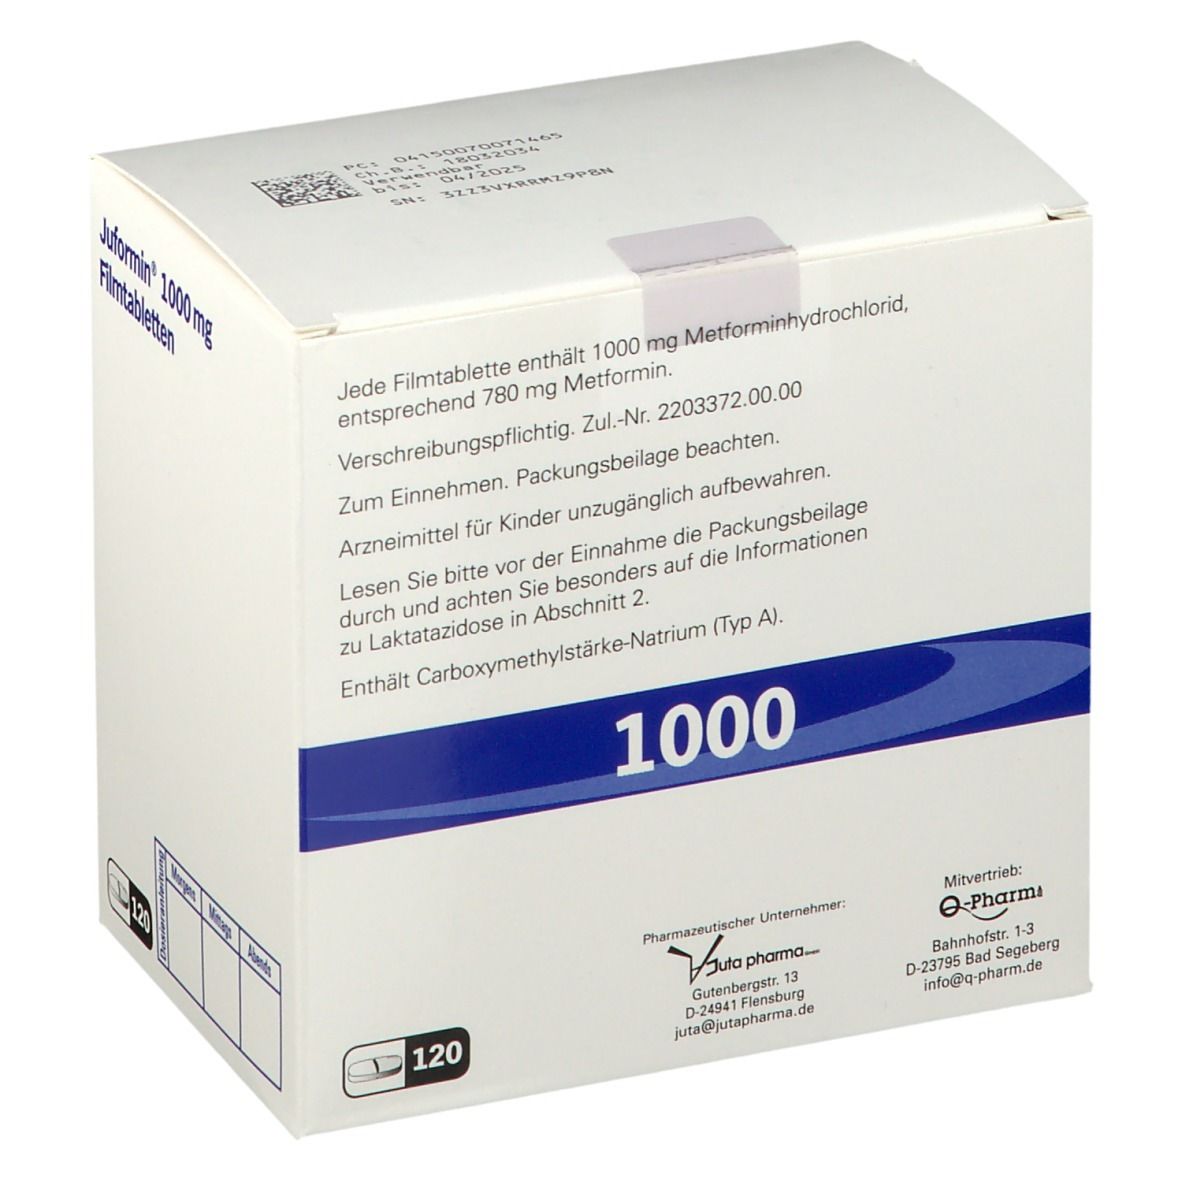 Juformin® 1000 mg